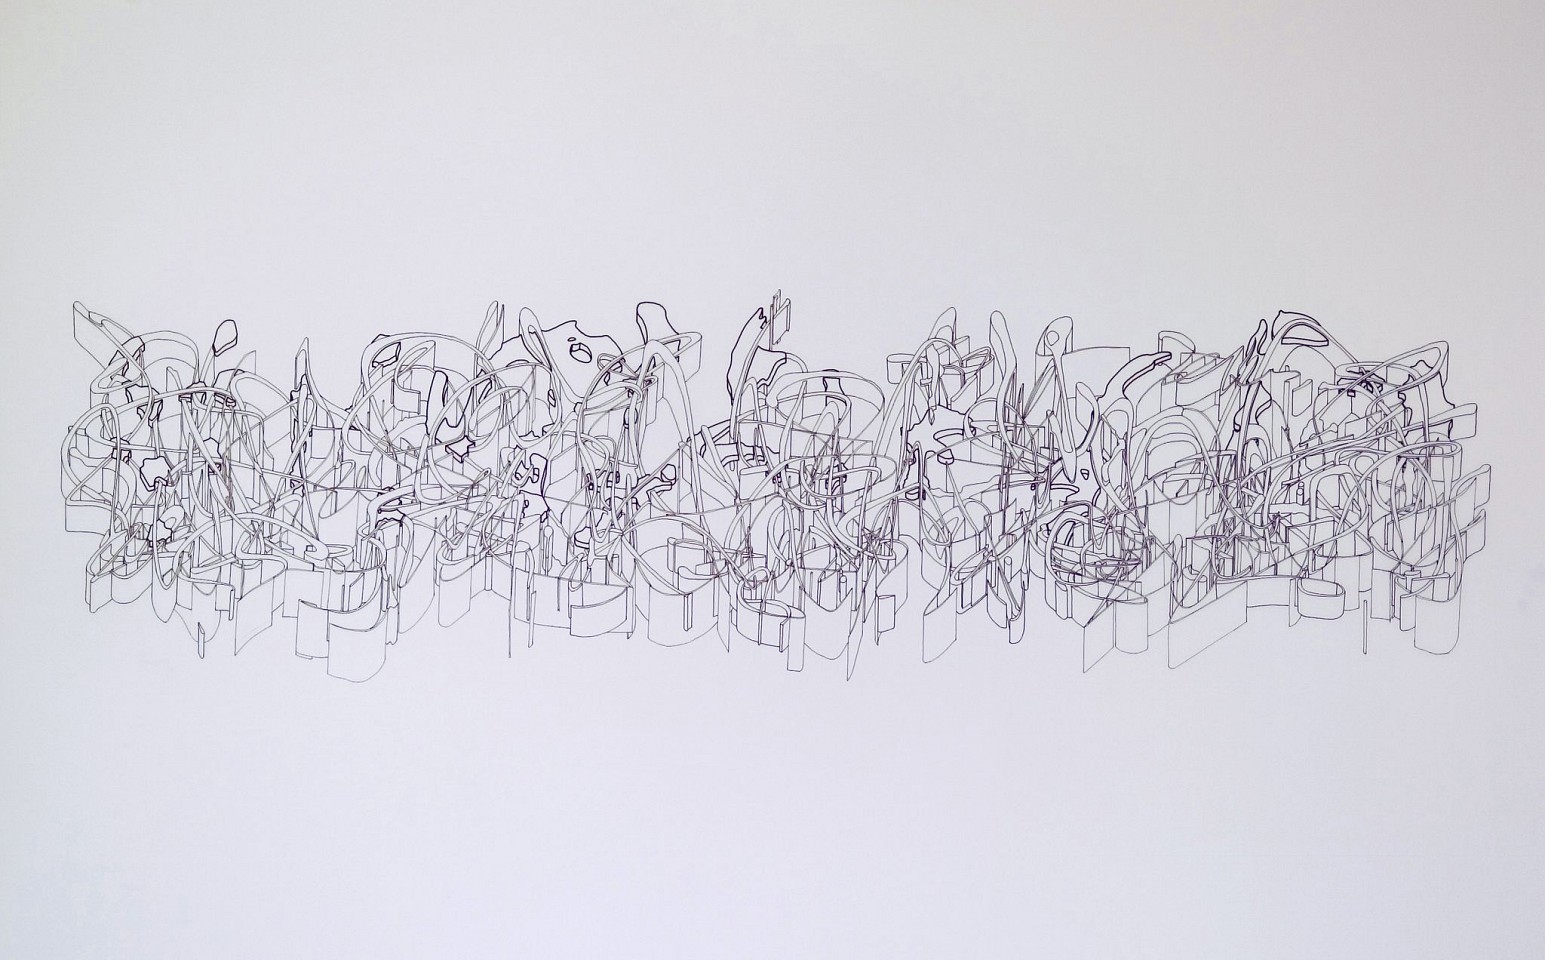 FELICE GRODIN, Tiempo pasivo, 2006
ink on mylar, 24 x 36 in. (61 x 91.4 cm)
FG-C-0013